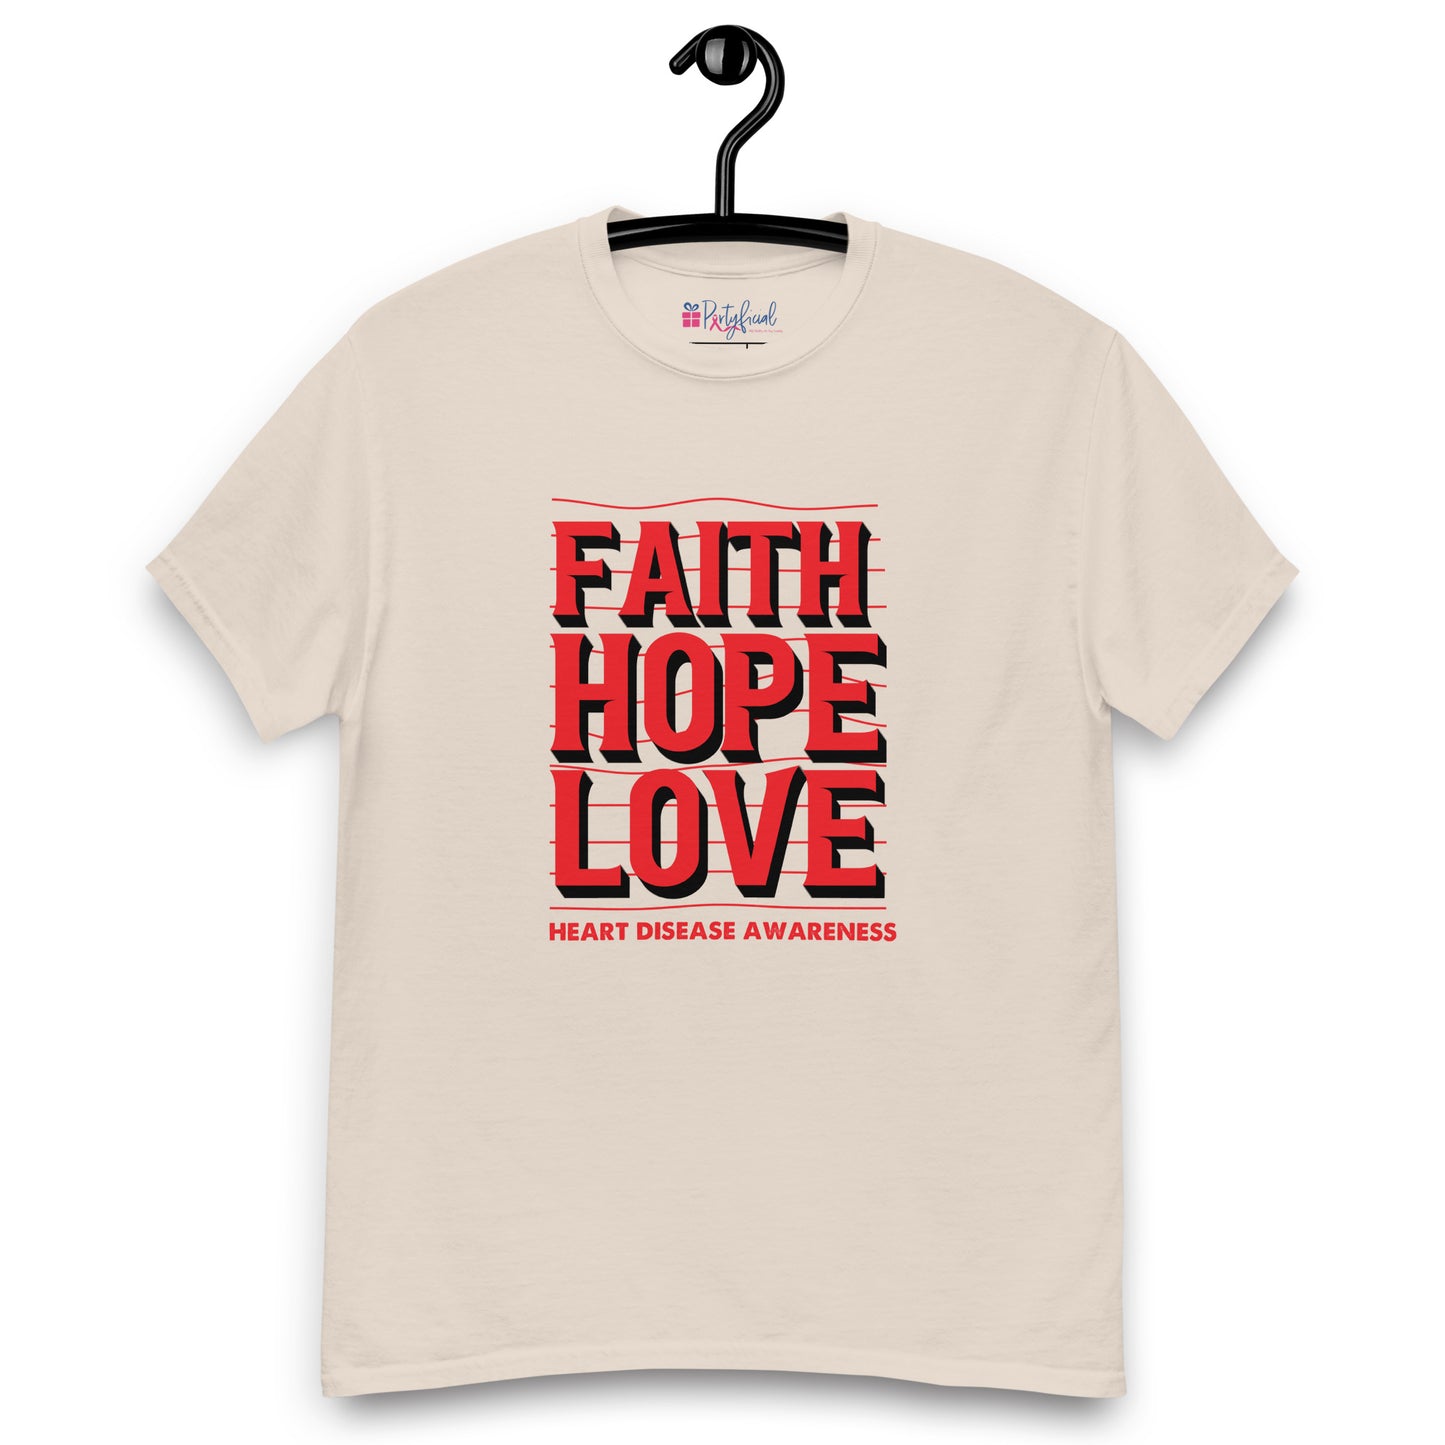 Faith Hope Love Heart Disease Awareness tee